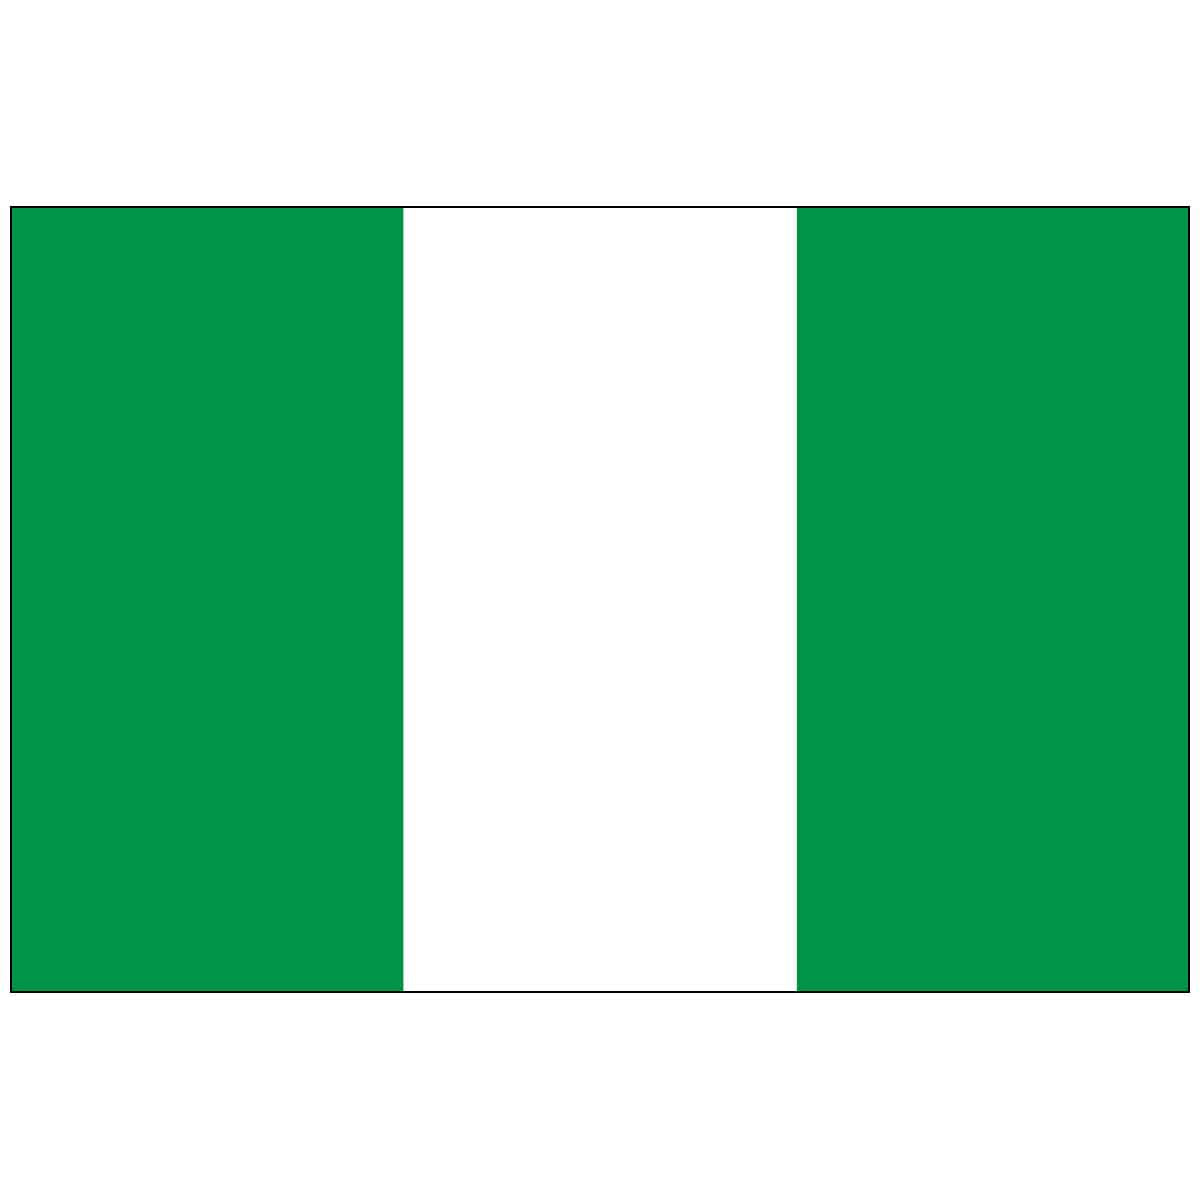 Nigeria (UN) World Flag